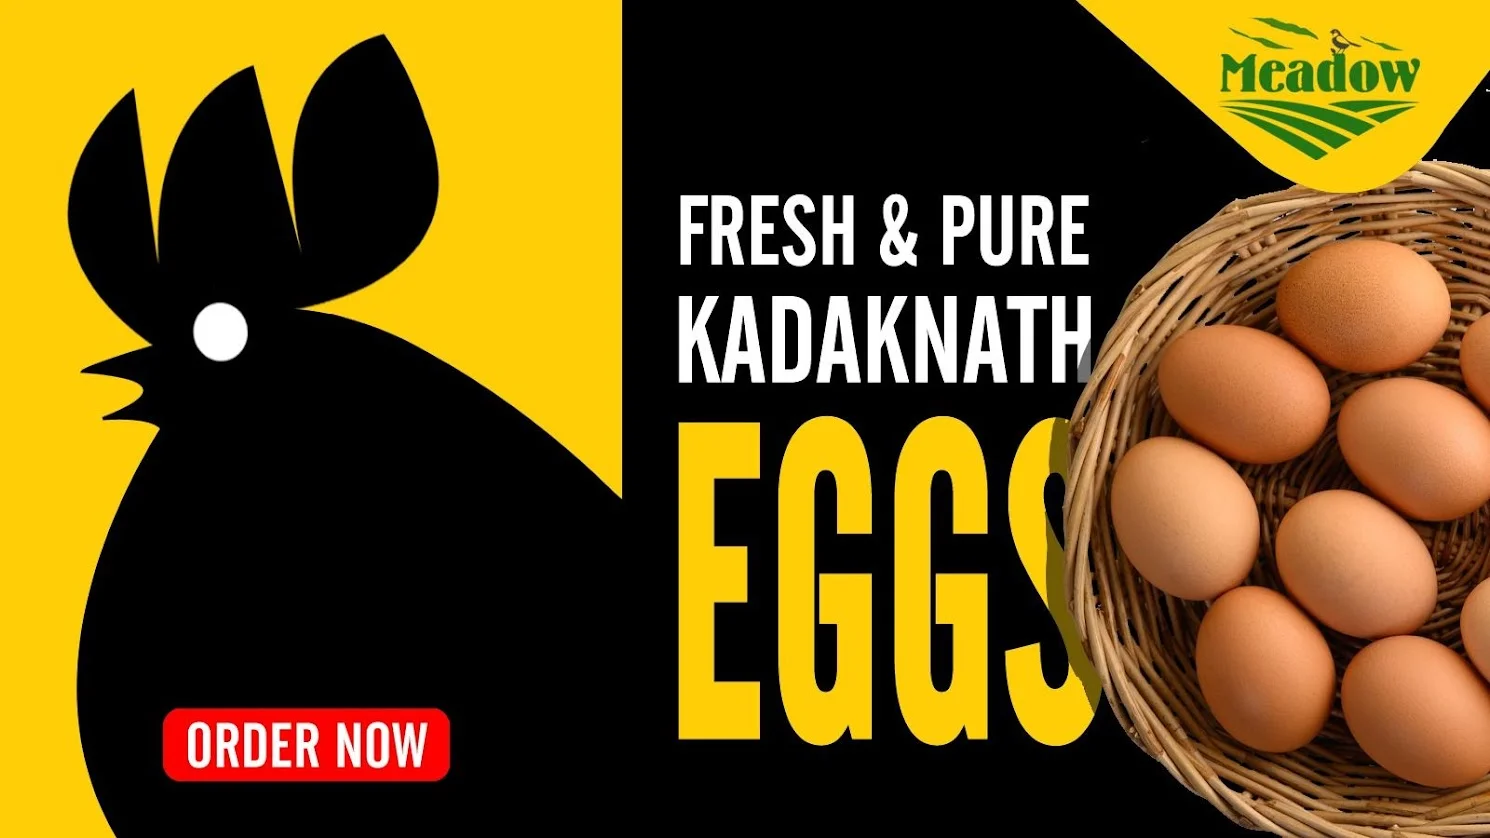 Fresh & pure kadaknath eggs